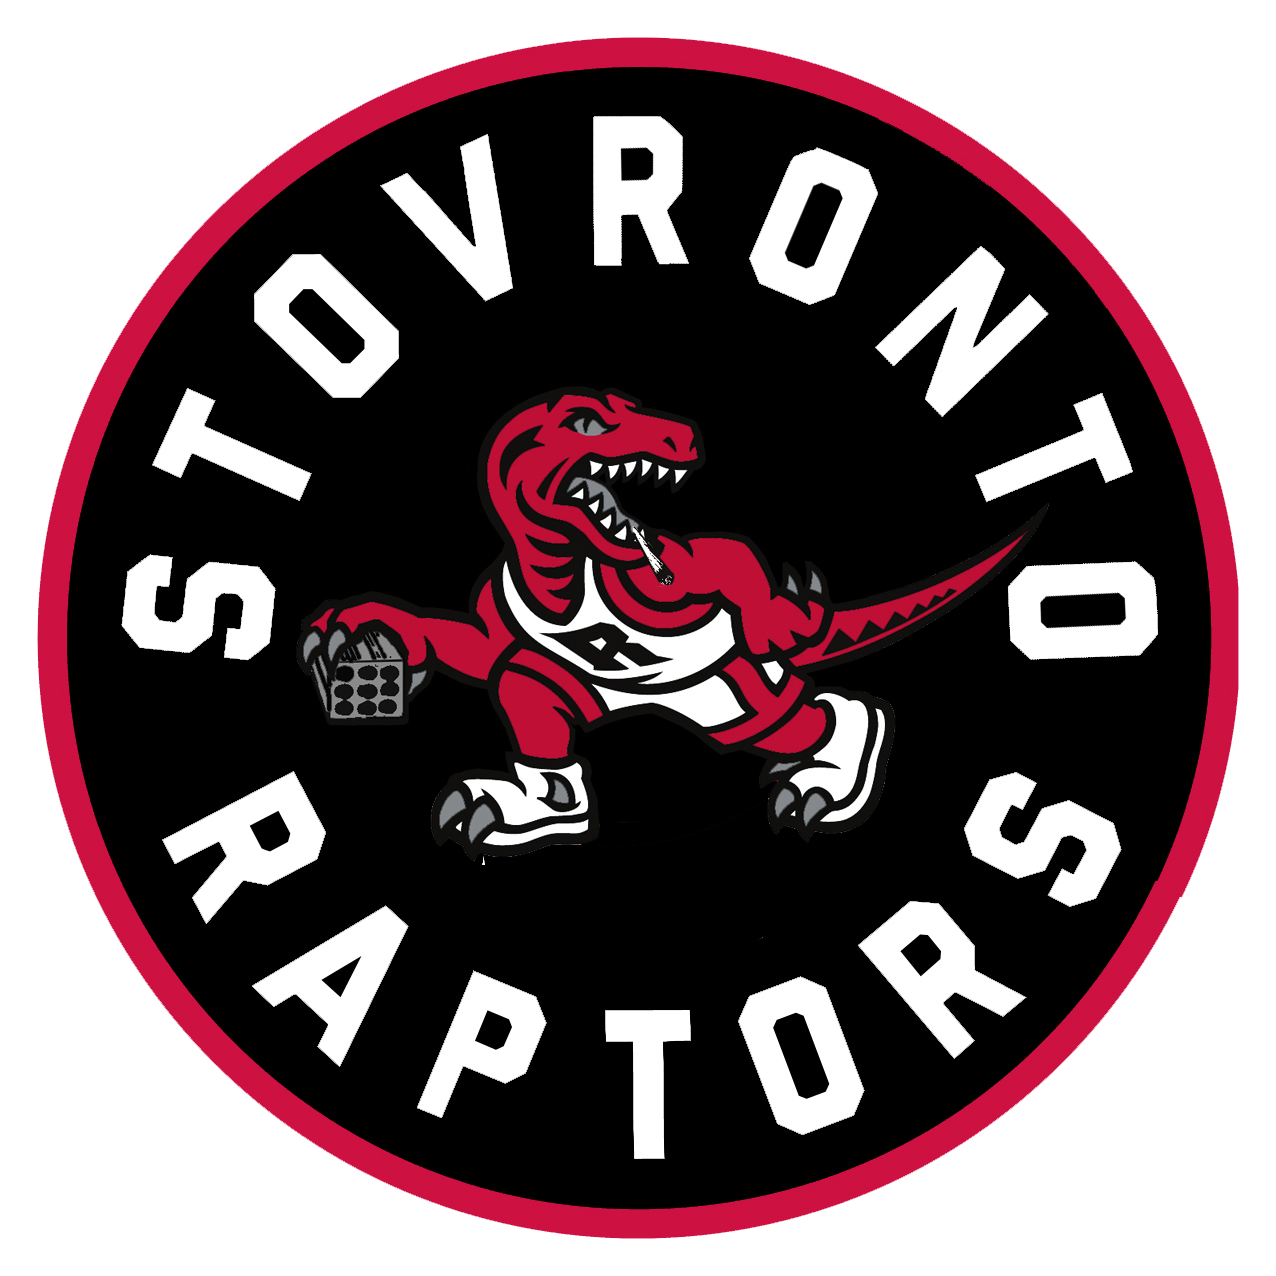 Team symbol of STOVRONTO RAPTORS